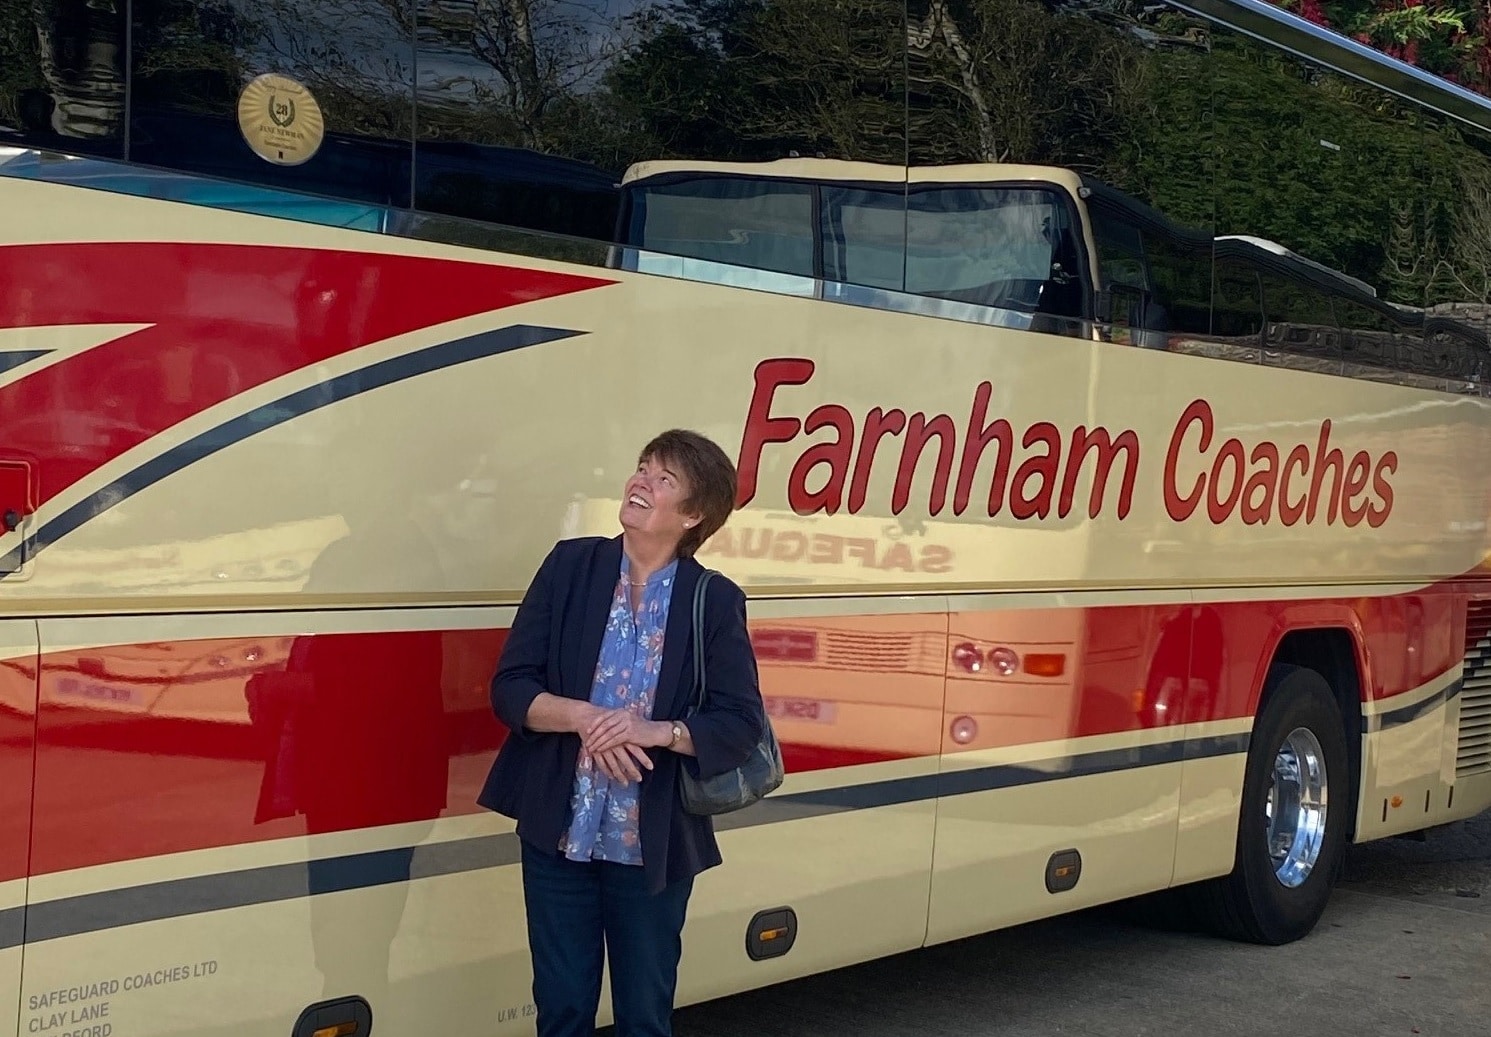 Jane Newman retires from Farnham Coaches